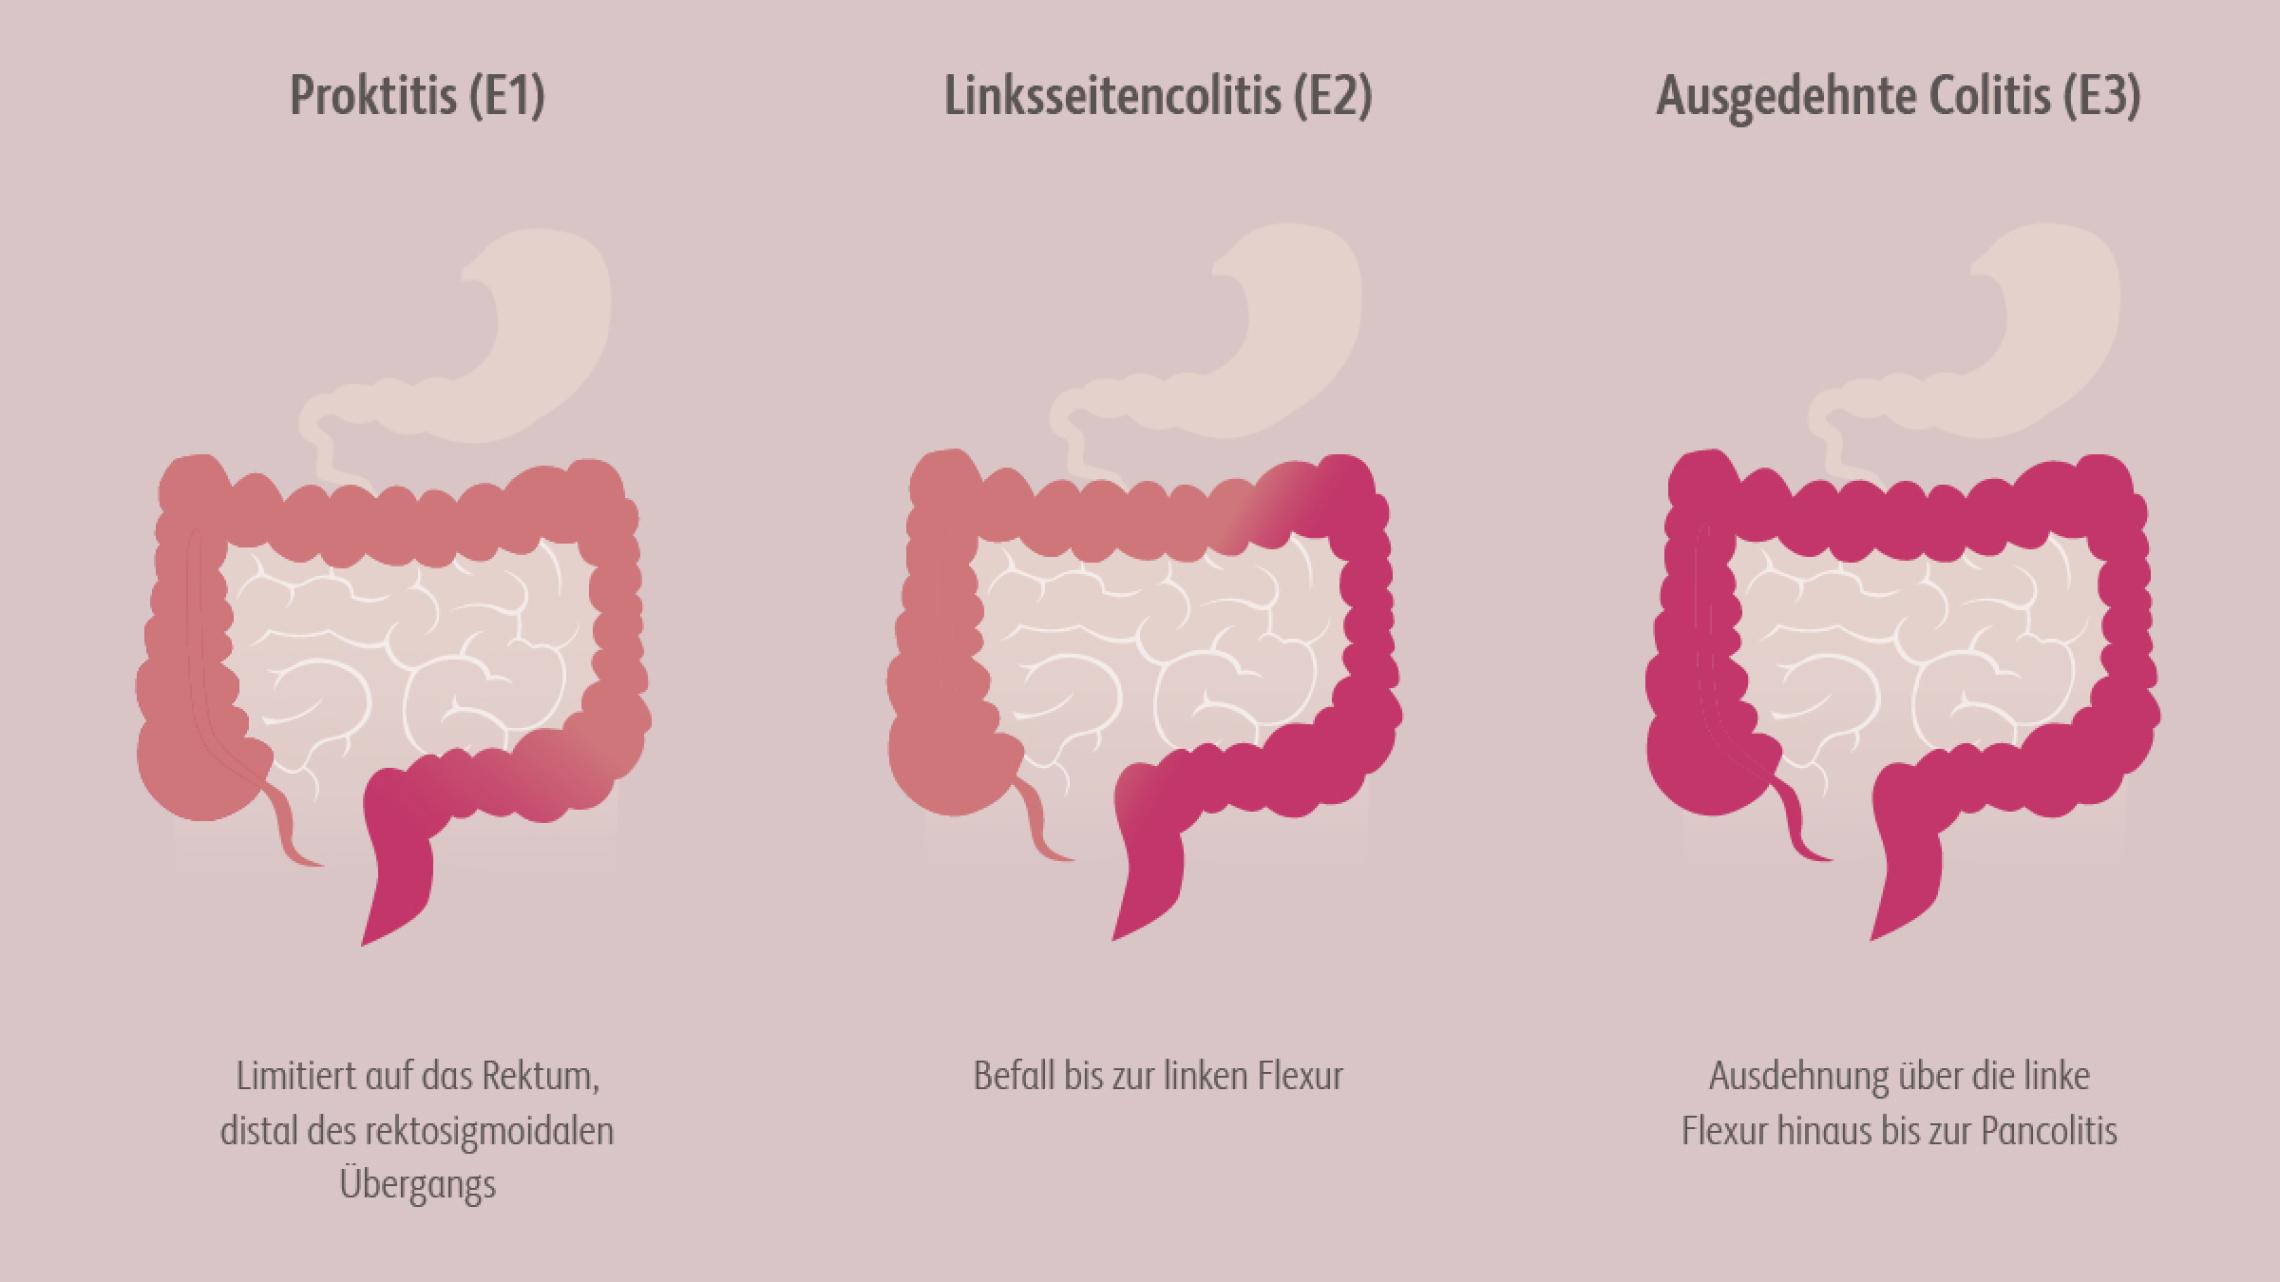 Ausdehnung der Colitis ulcerosa – Klassifikation nach Silverberg et al.: Proktitis, Linksseitencolitis, ausgedehnte Colitis